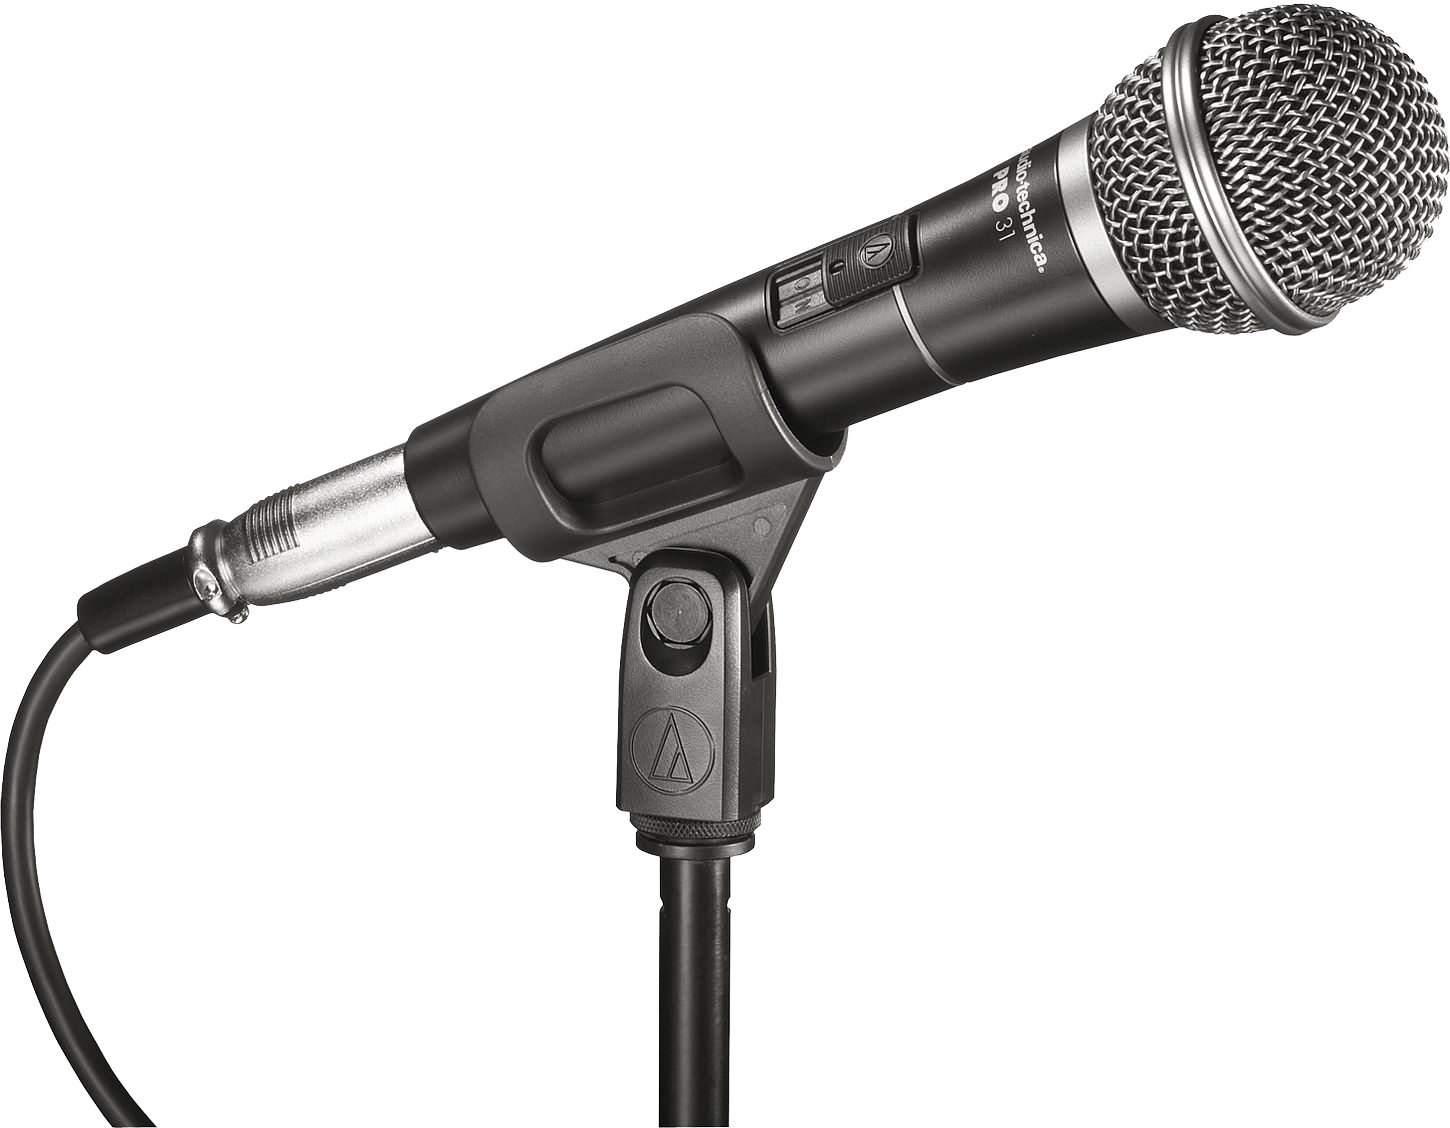 A Close Up Of A Microphone